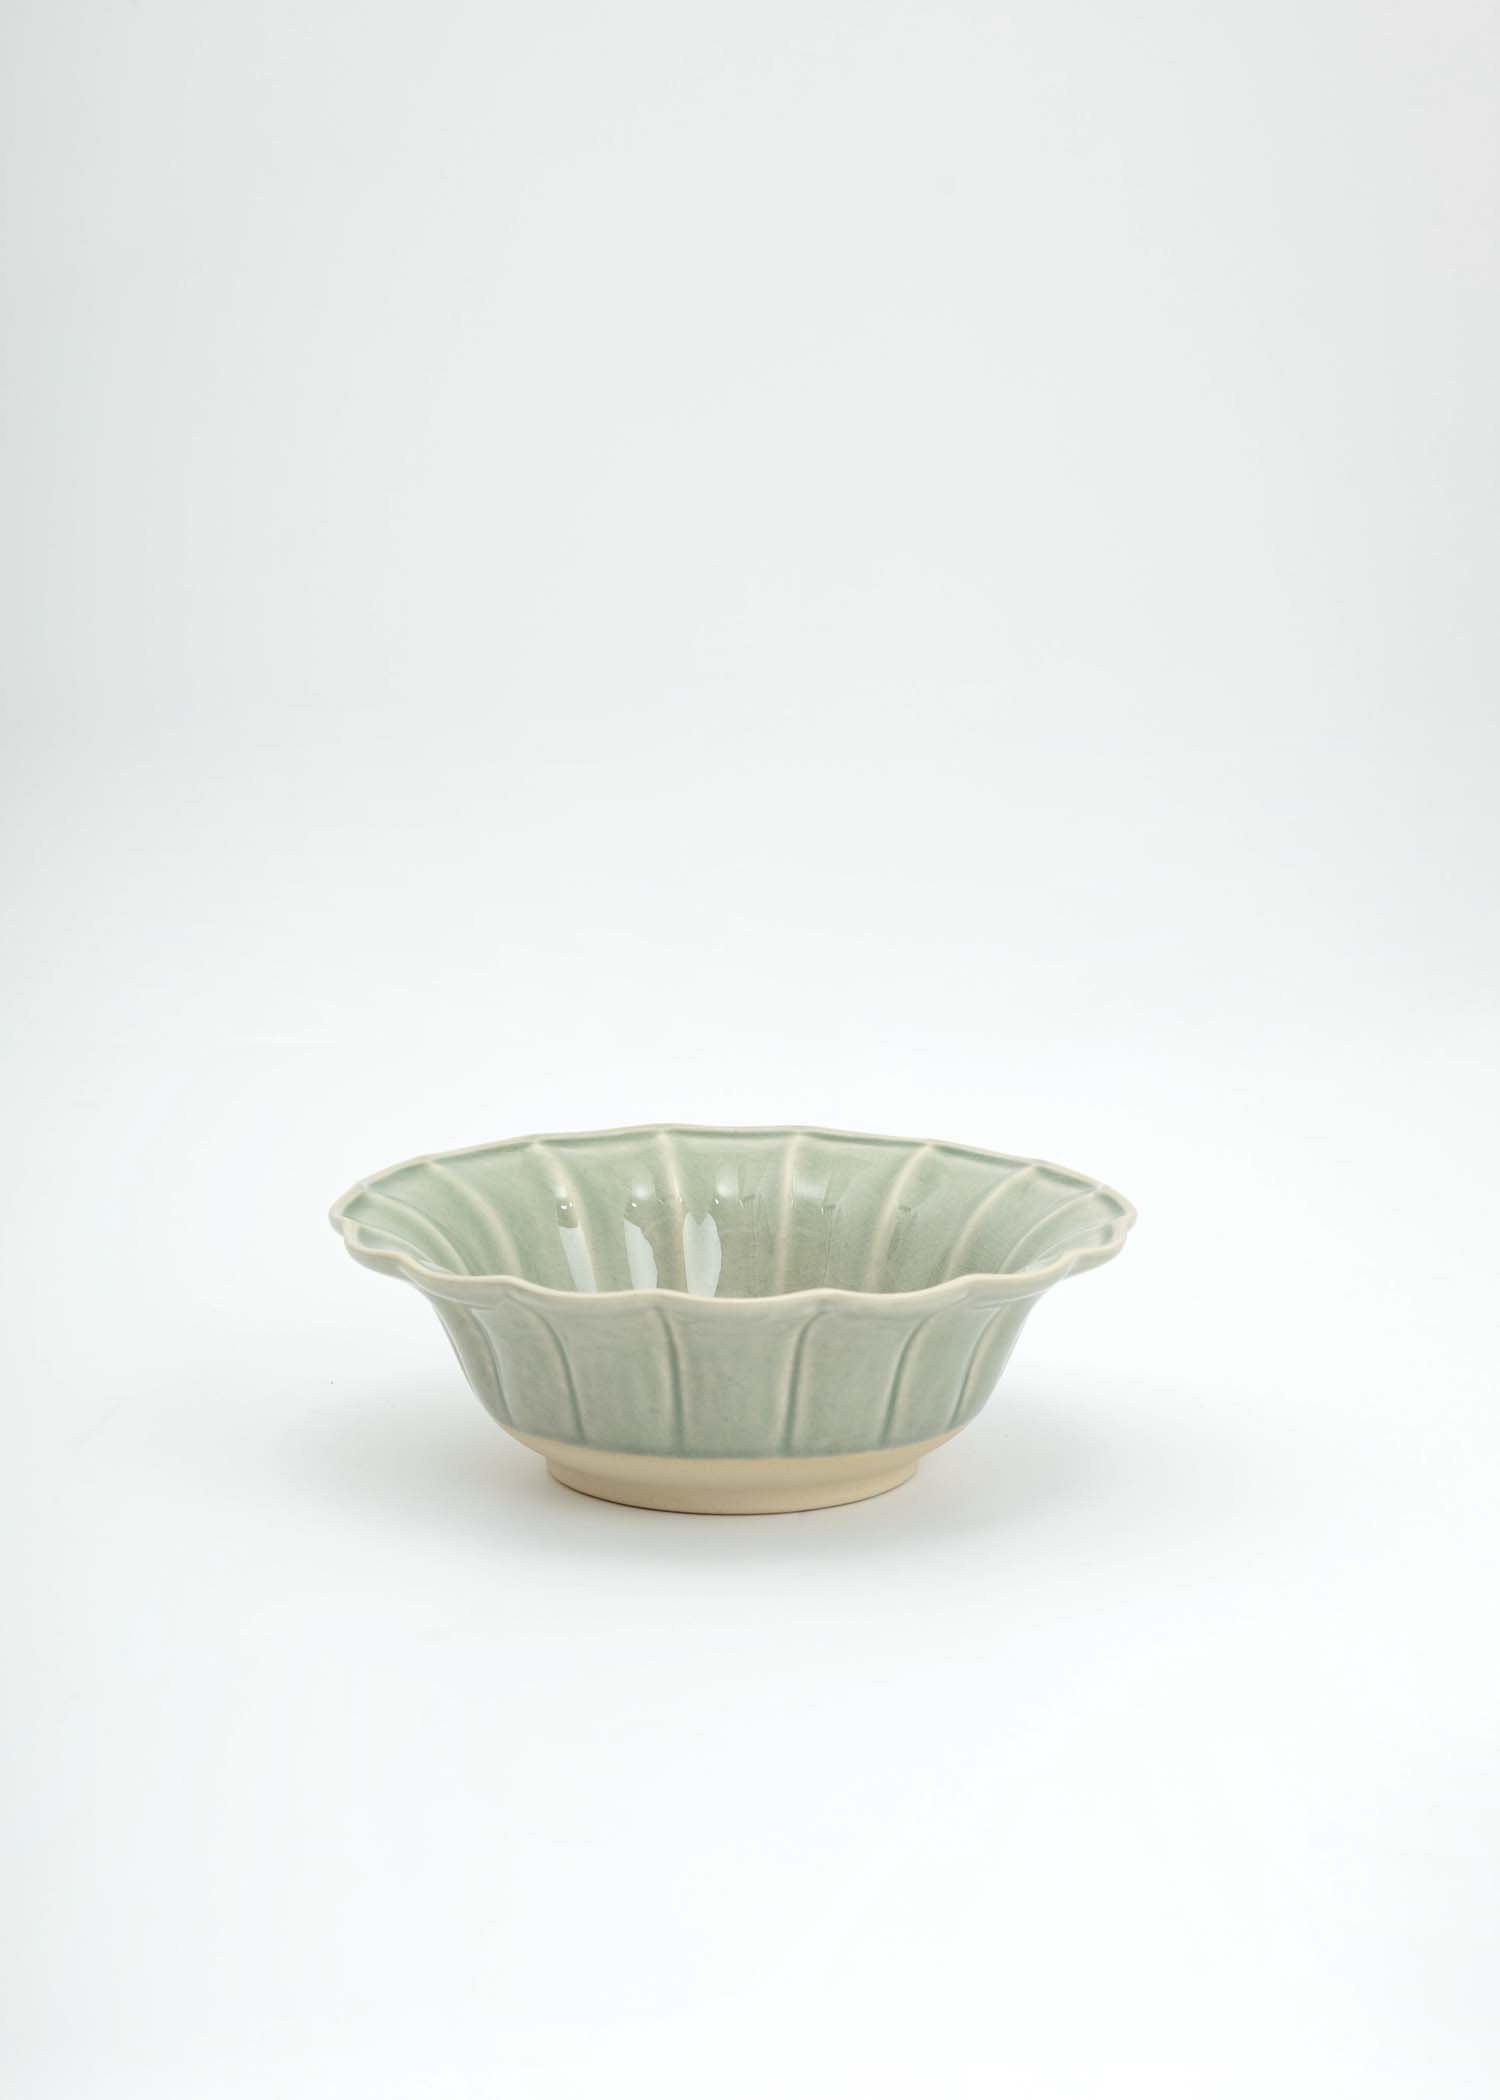 Wavy stoneware bowl